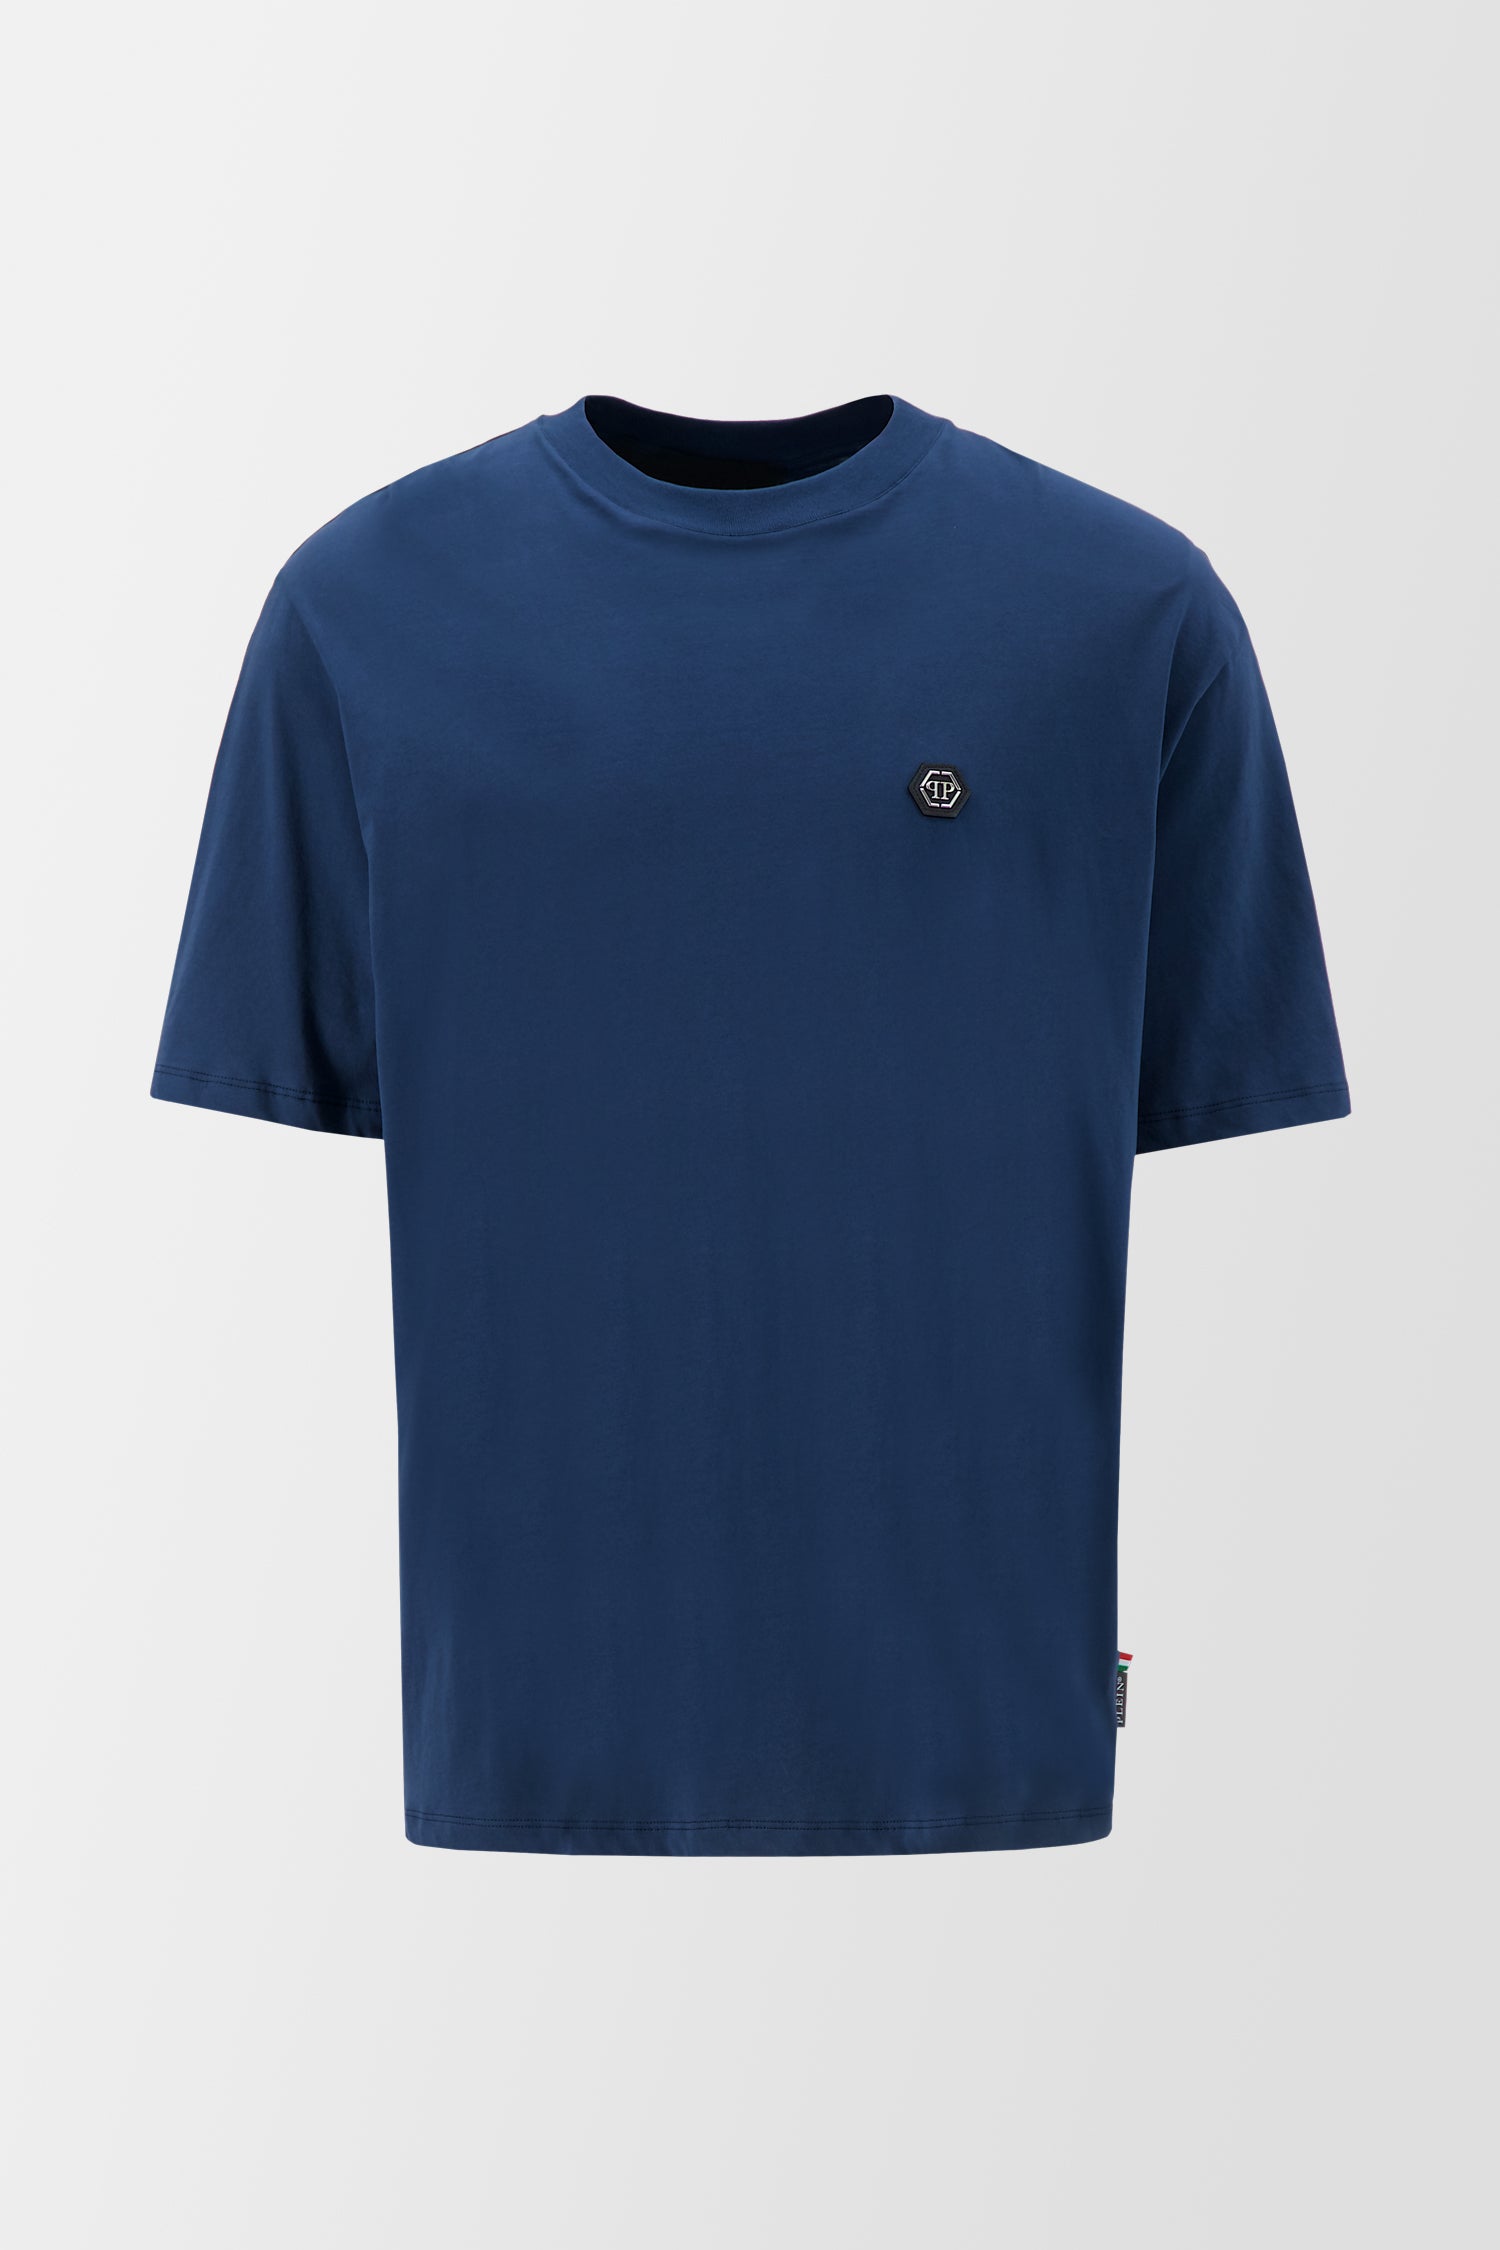 Philipp Plein Navy T-Shirt